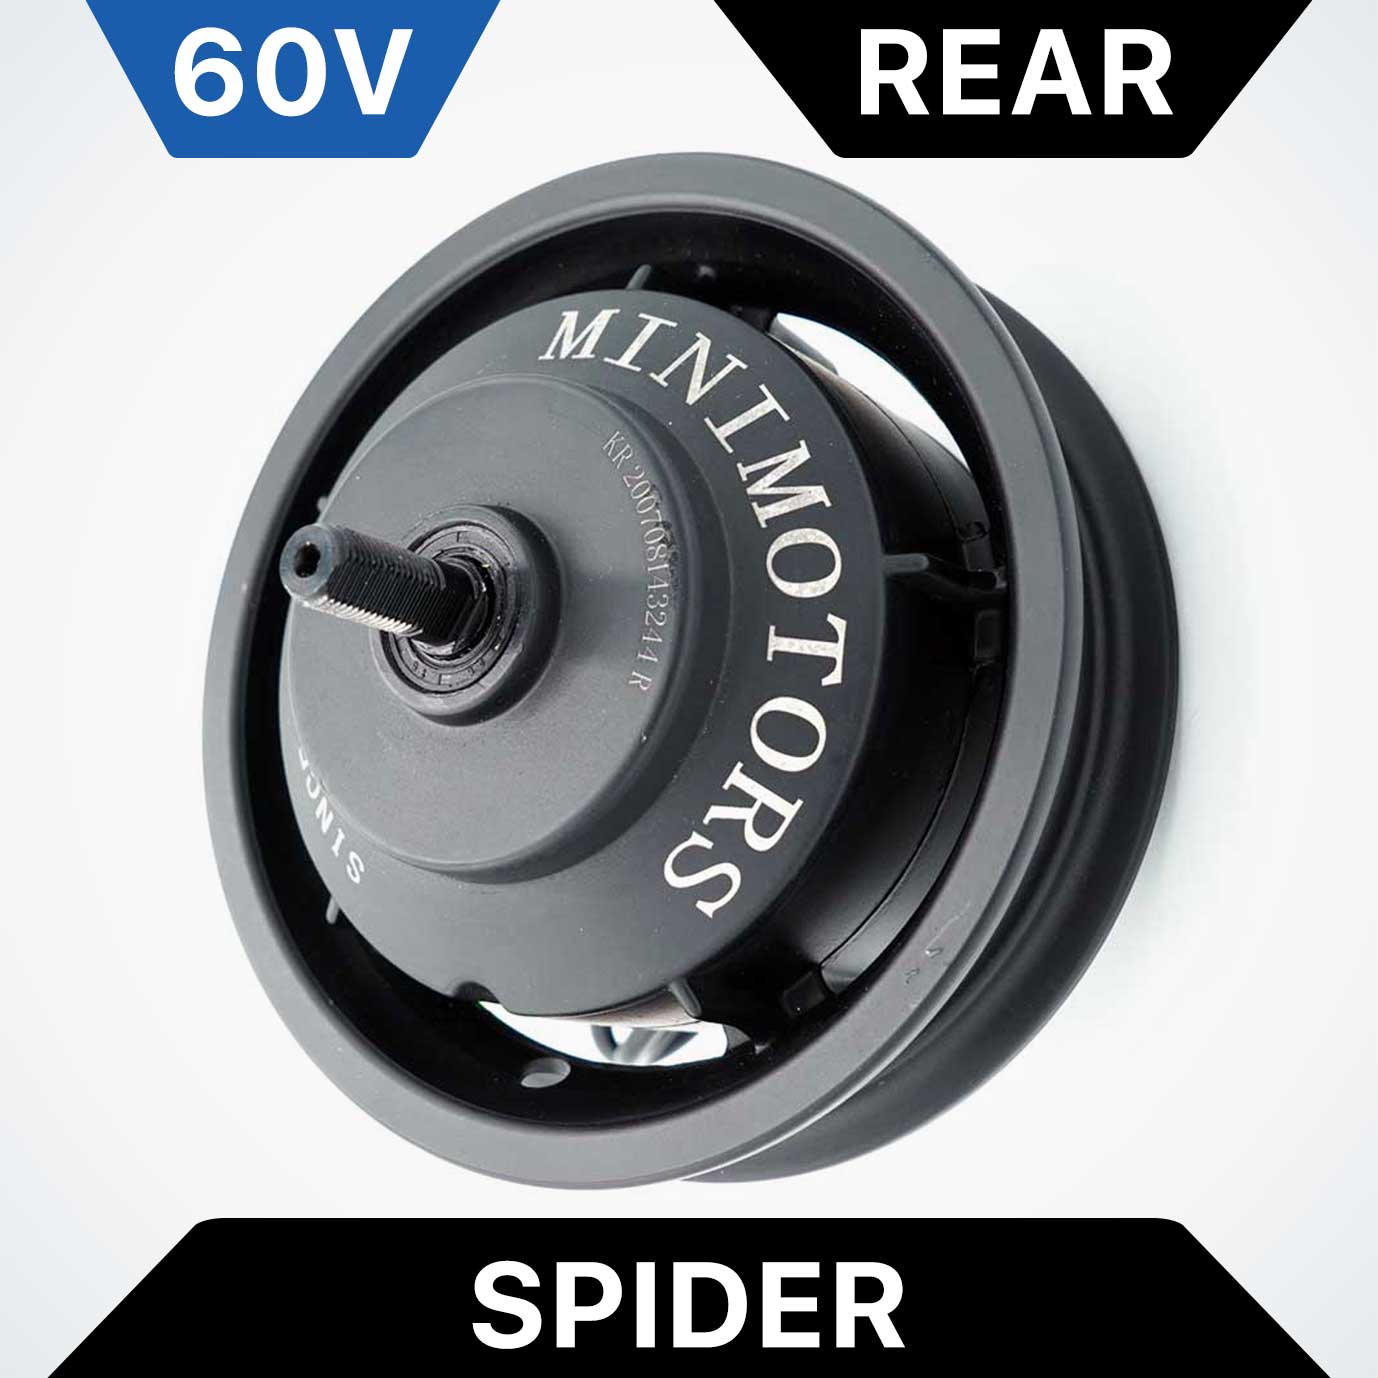 Rear Motor for Dualtron Spider - 60V